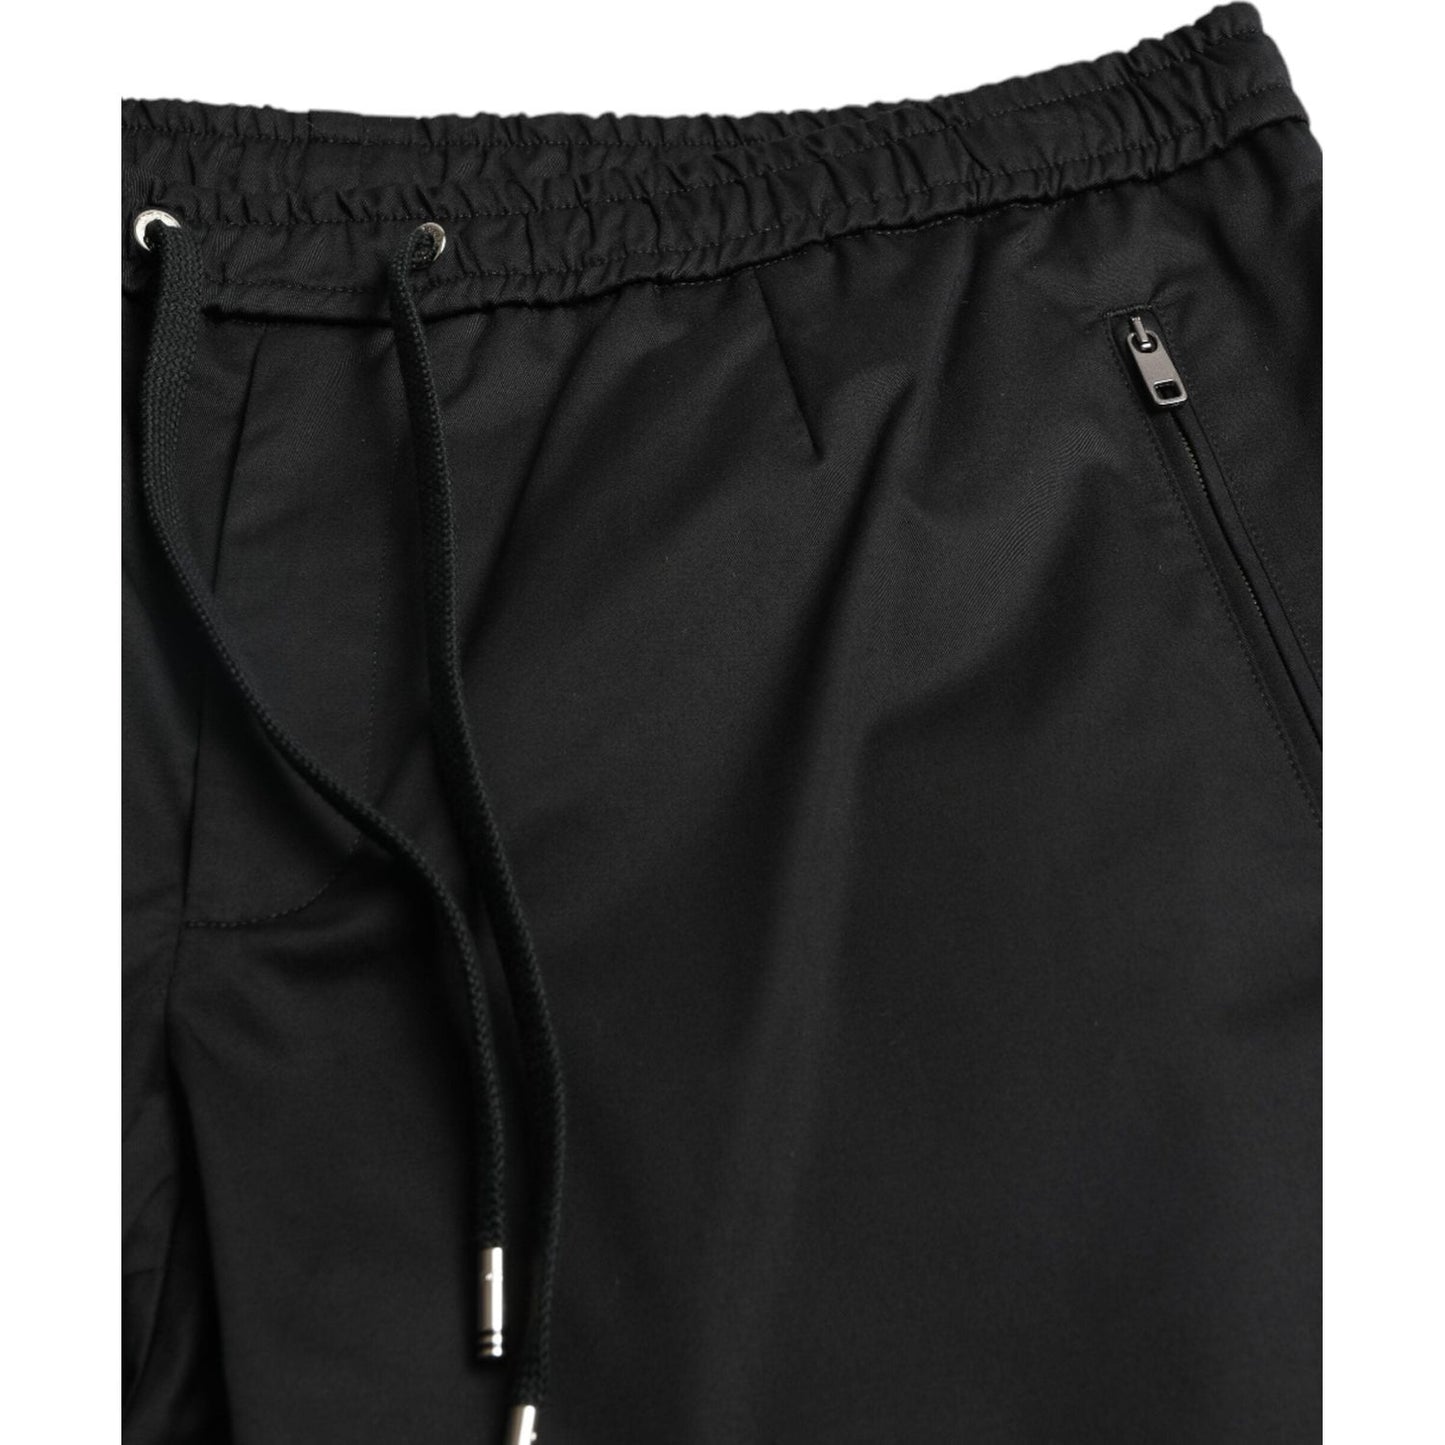 Dolce & Gabbana Sleek Skinny Cotton Jogger Pants sleek-skinny-cotton-jogger-pants